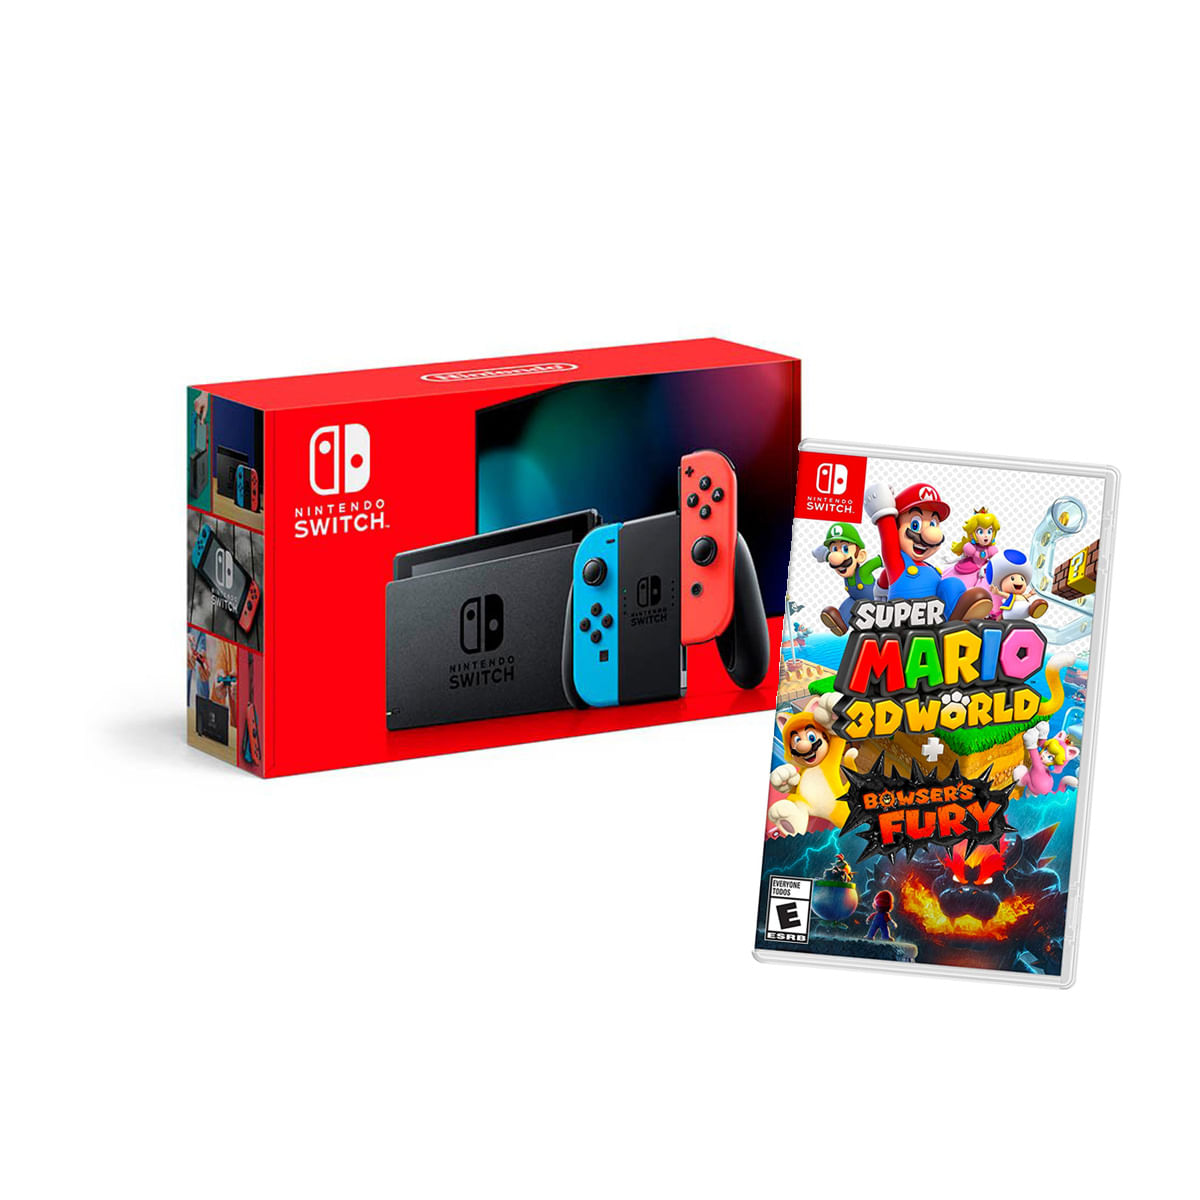 Nintendo Switch 2019 Neon Bateria Extendida + Mario 3D World y Bowsers Fury